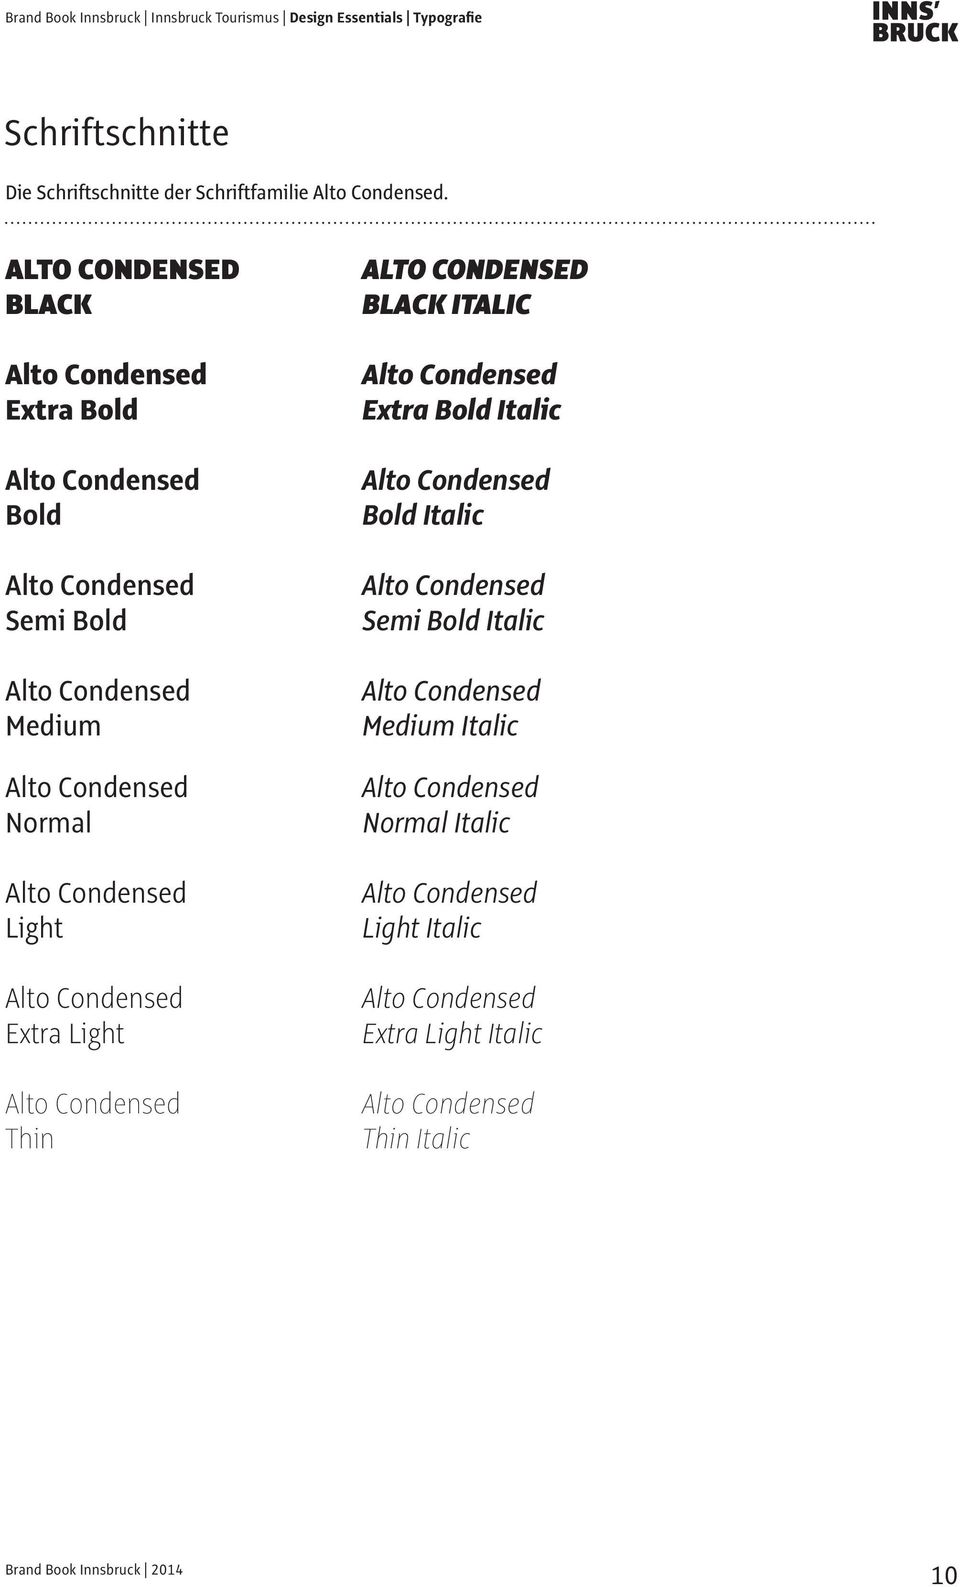 ALTO CONDENSED BLACK Extra Bold Bold Semi Bold Medium Normal Light Extra Light Thin ALTO